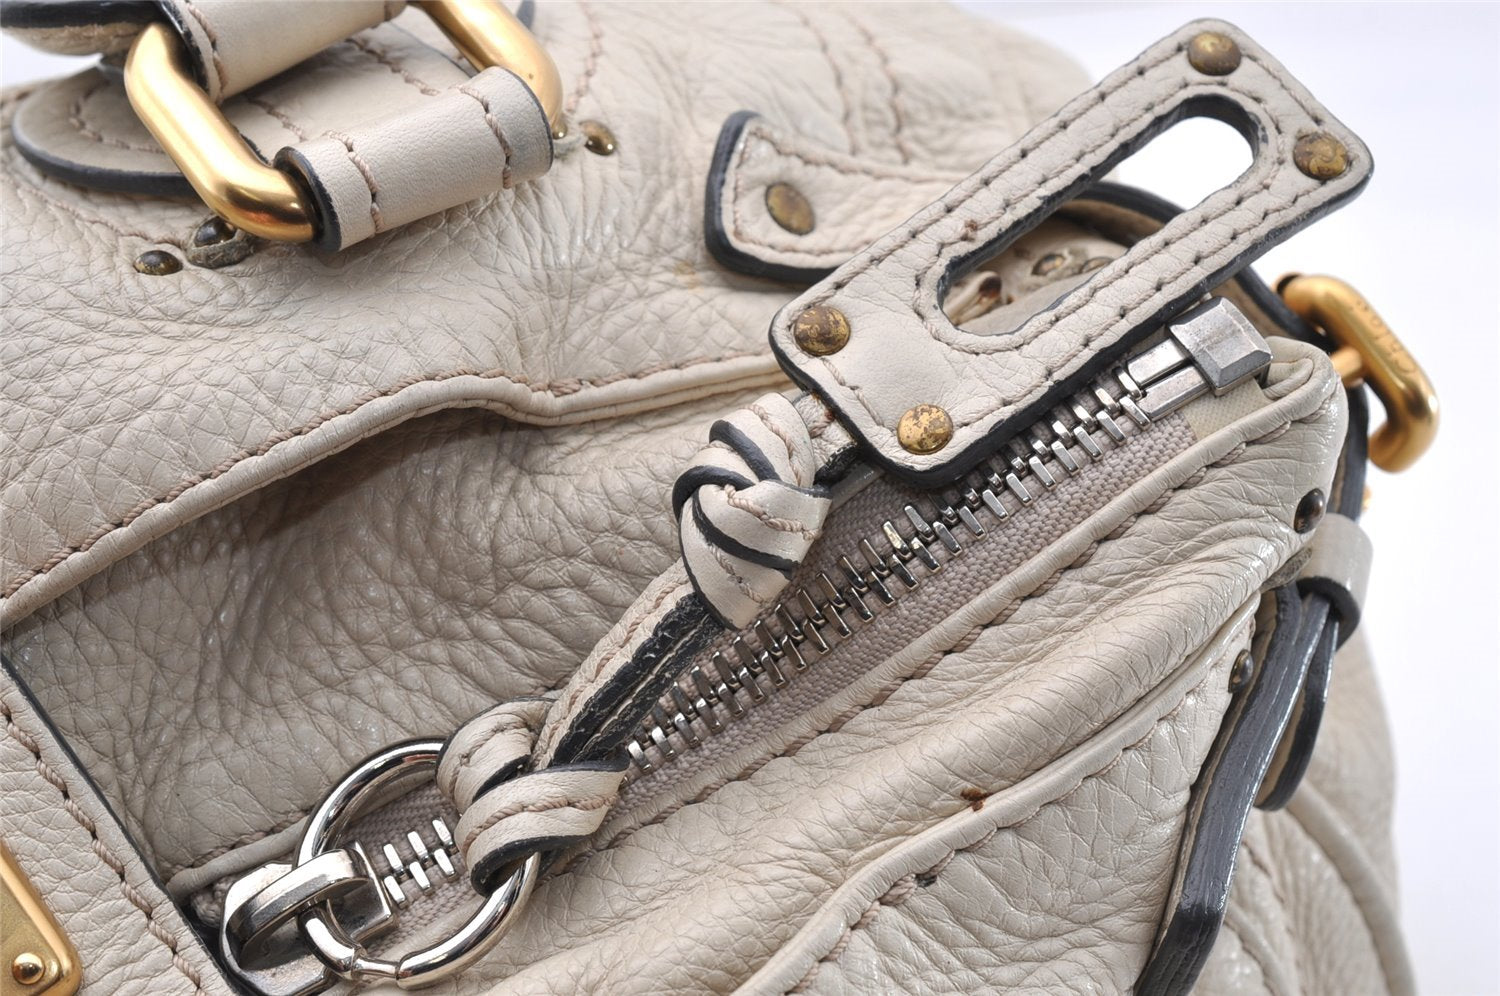 Authentic Chloe Vintage Paddington Leather Shoulder Hand Bag White 8192I